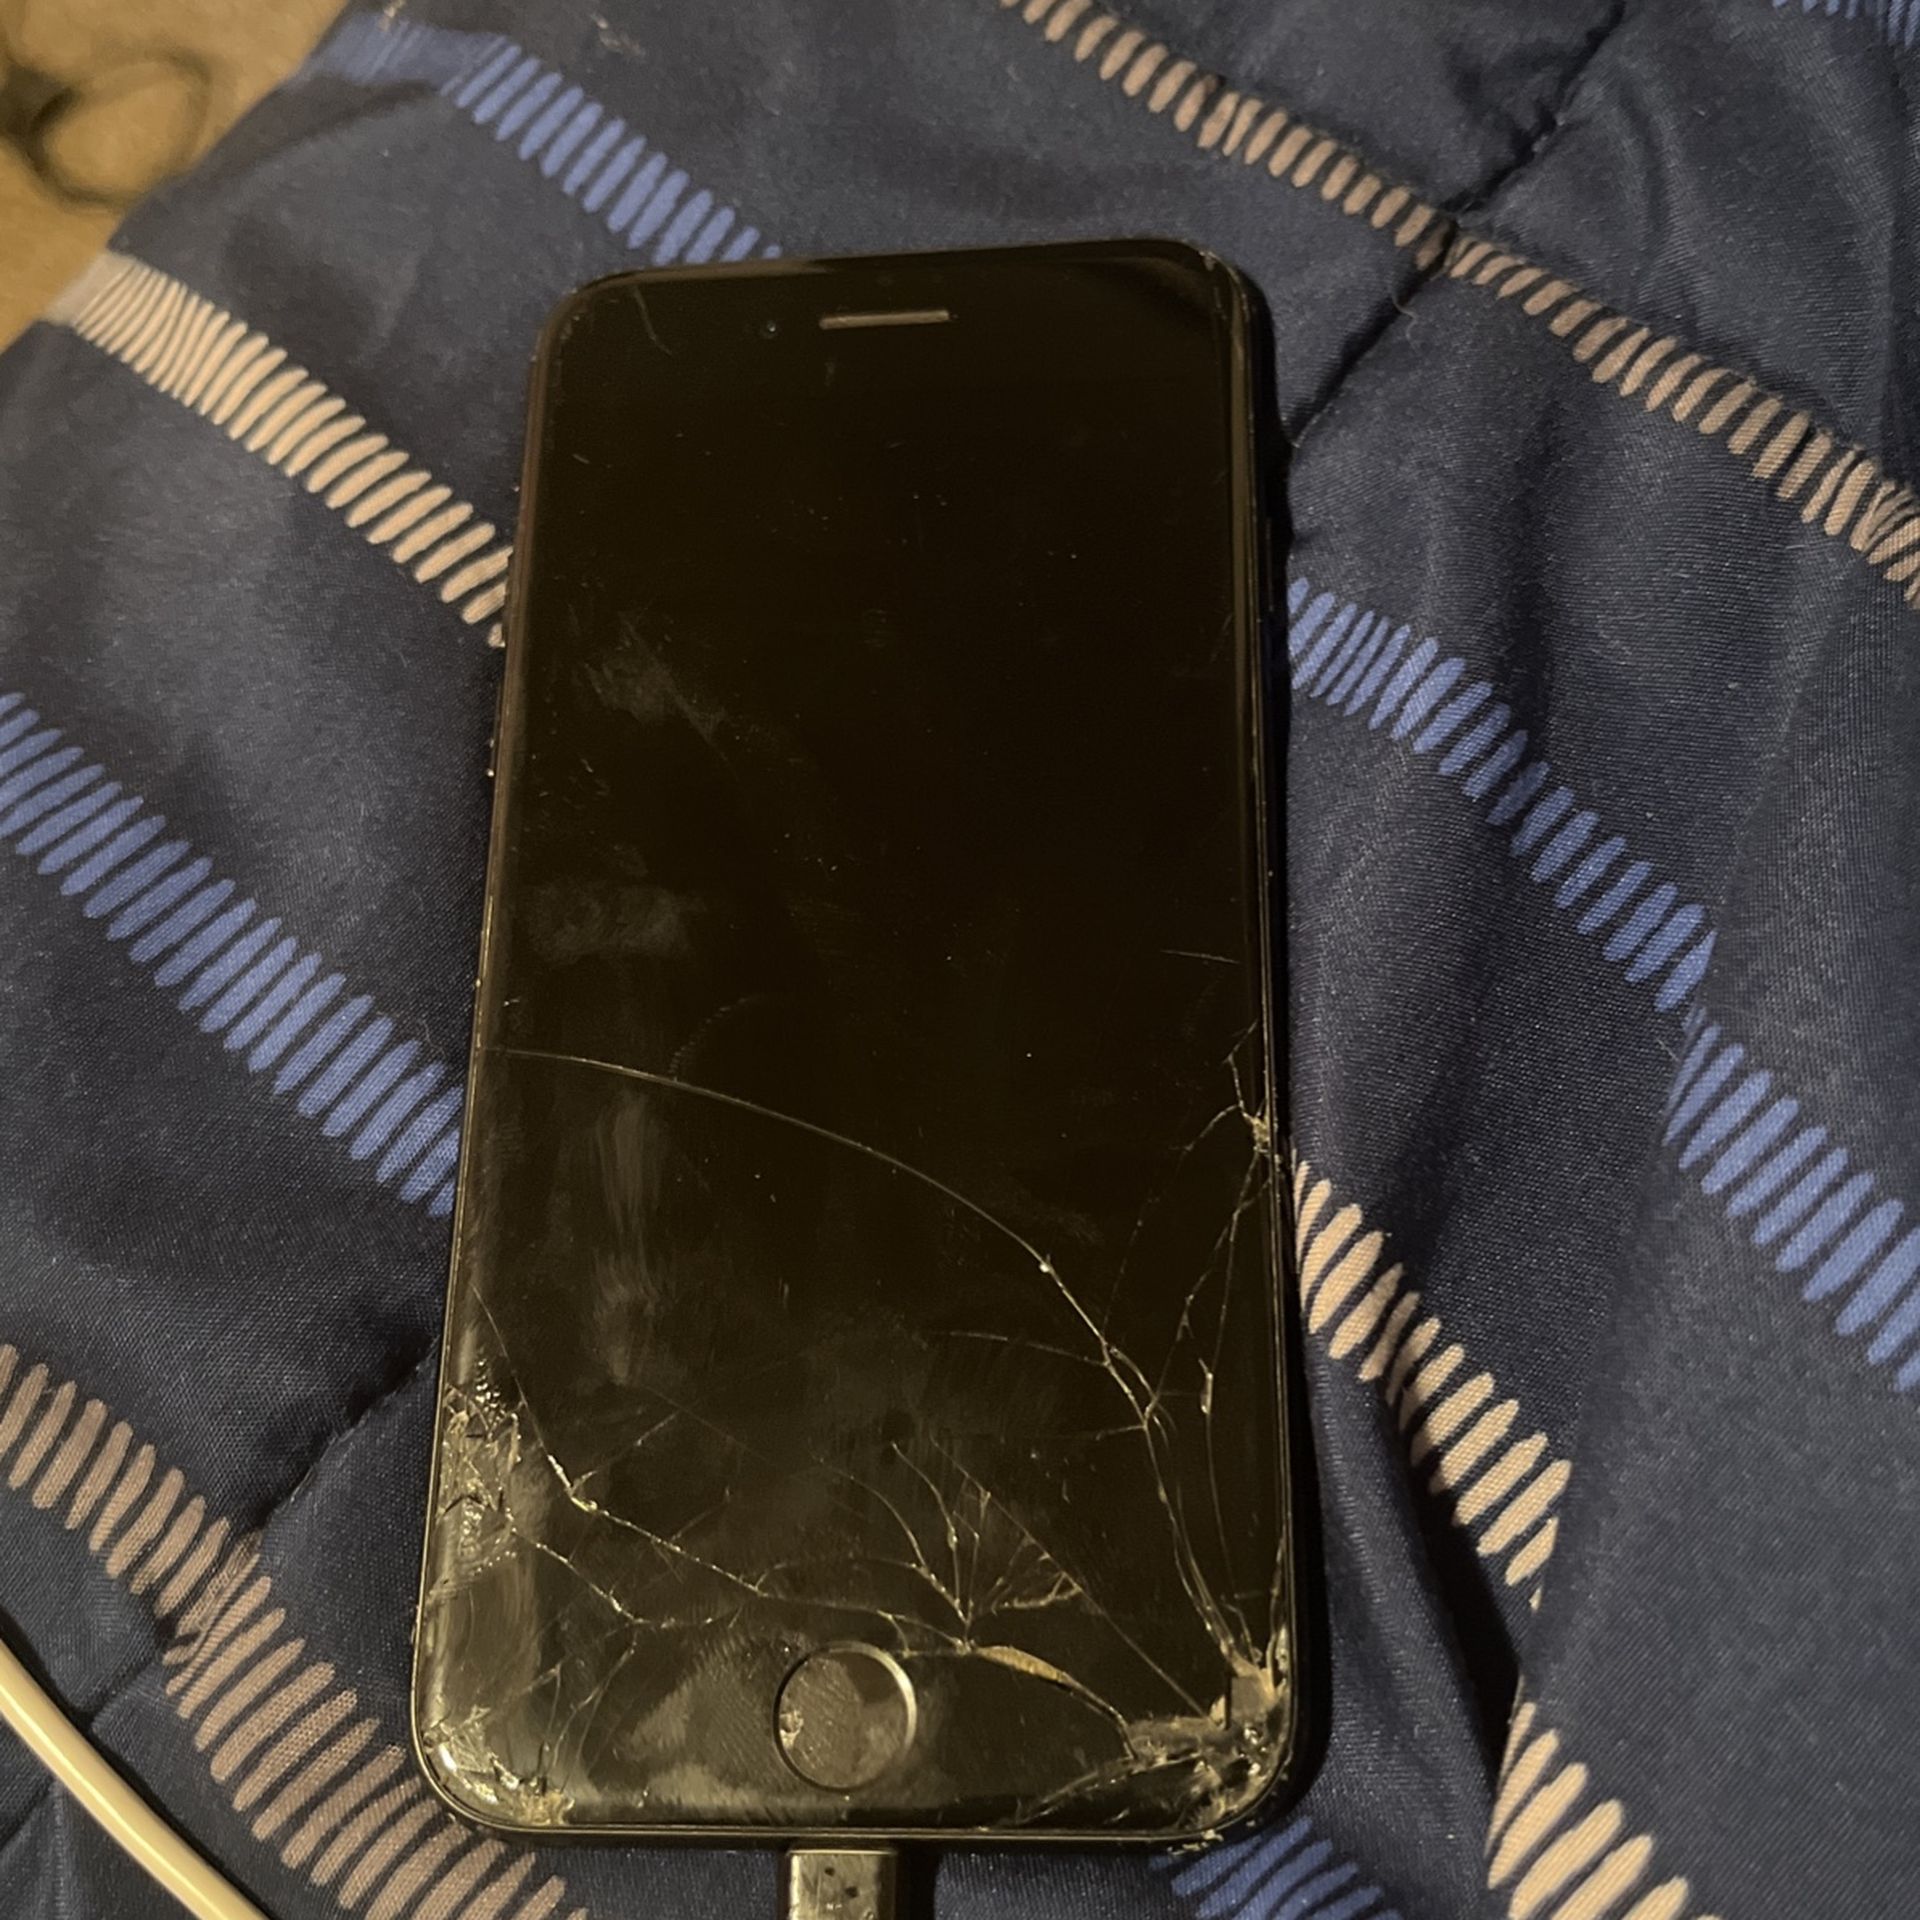  Black iPhone 7 Cracked Screen 